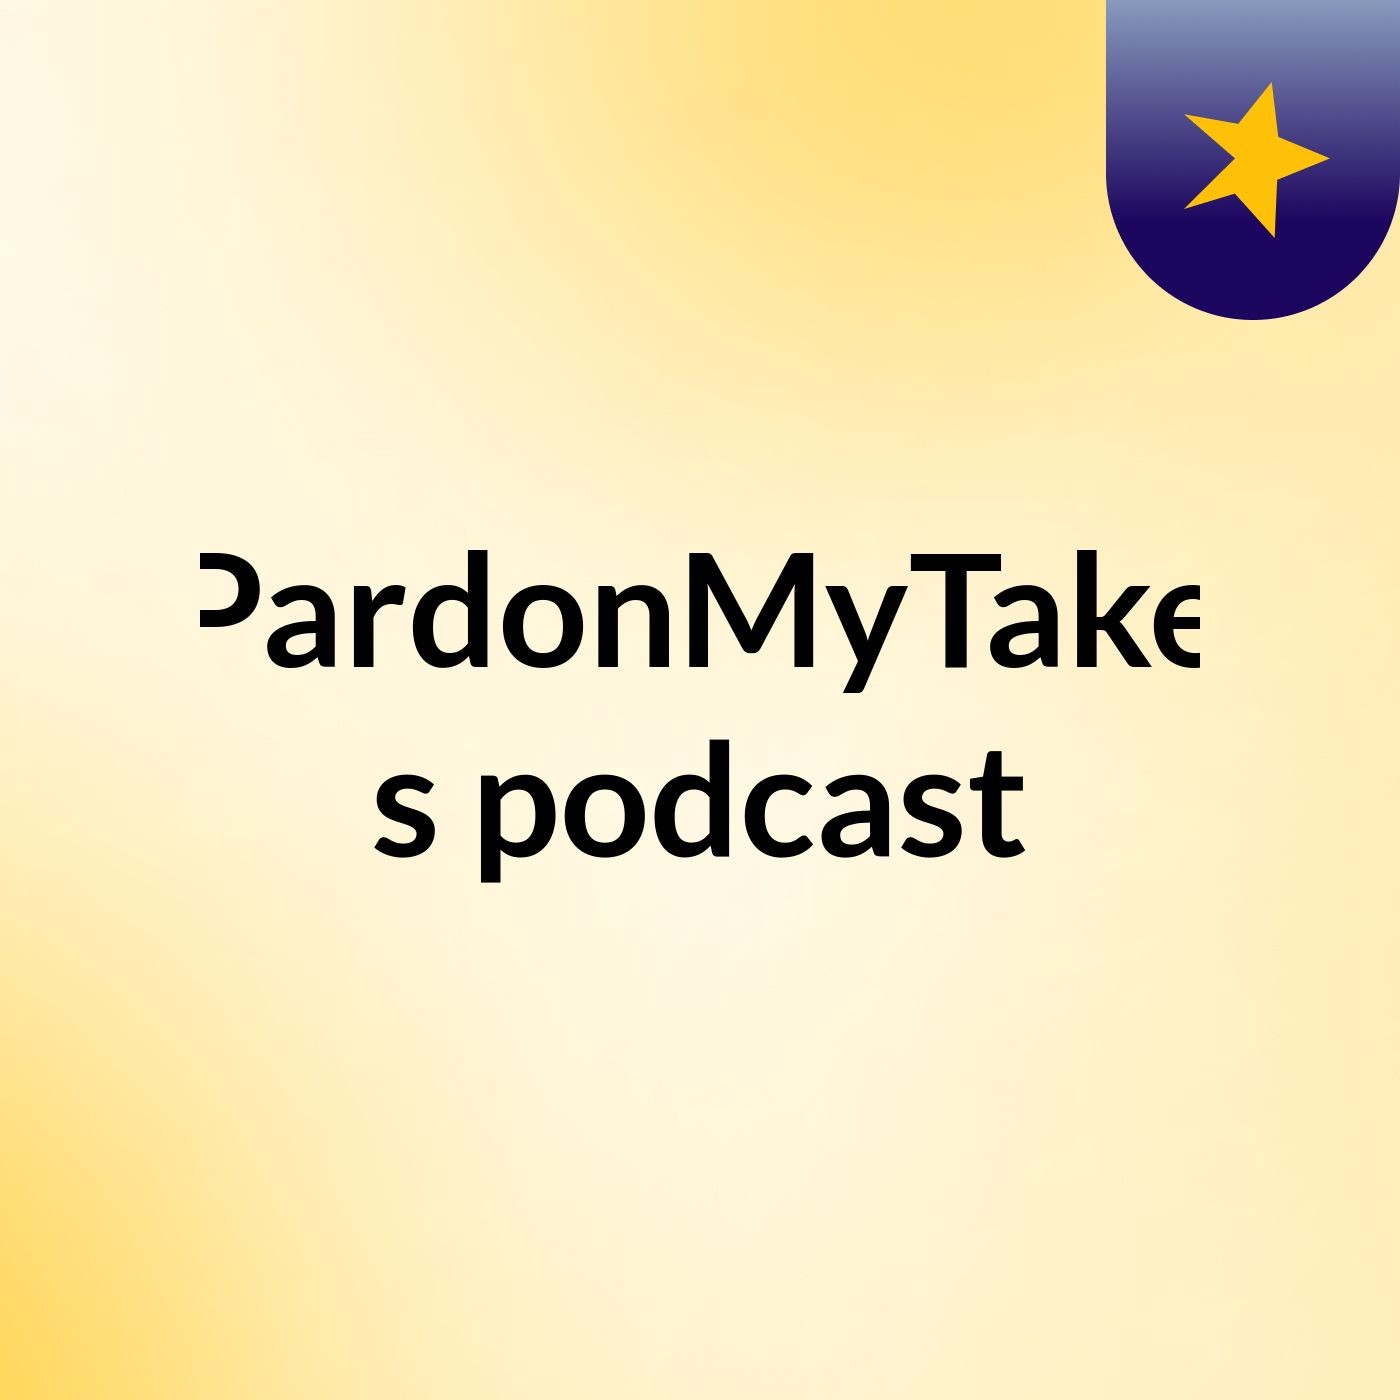 PardonMyTake's podcast